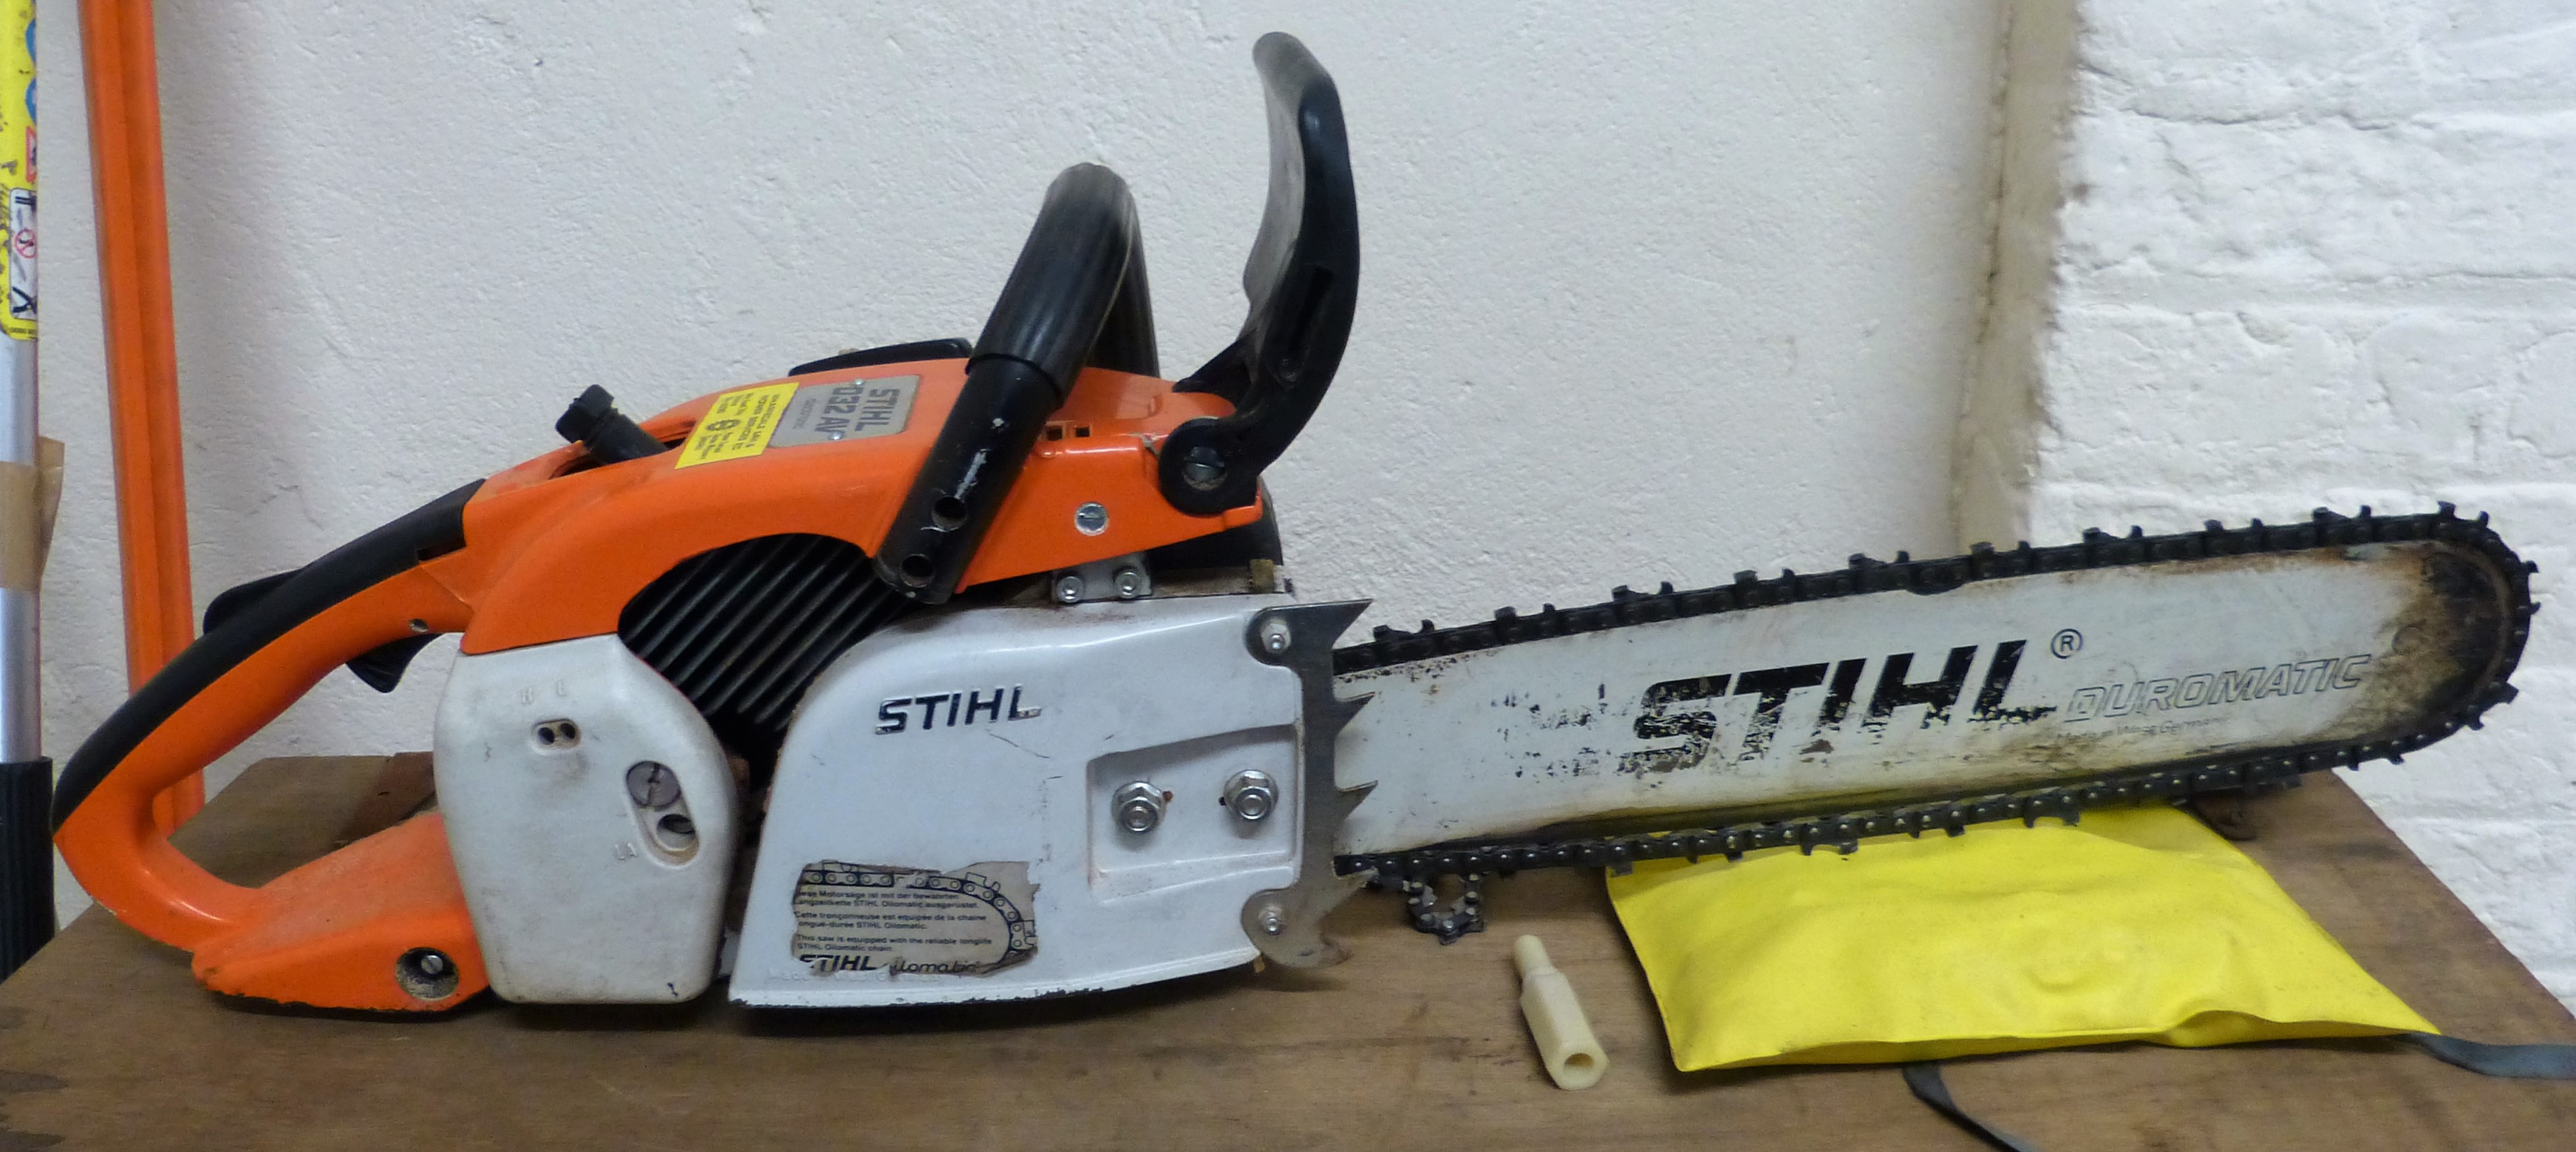 A Stihl 032 AV electronic petrol chainsaw, case